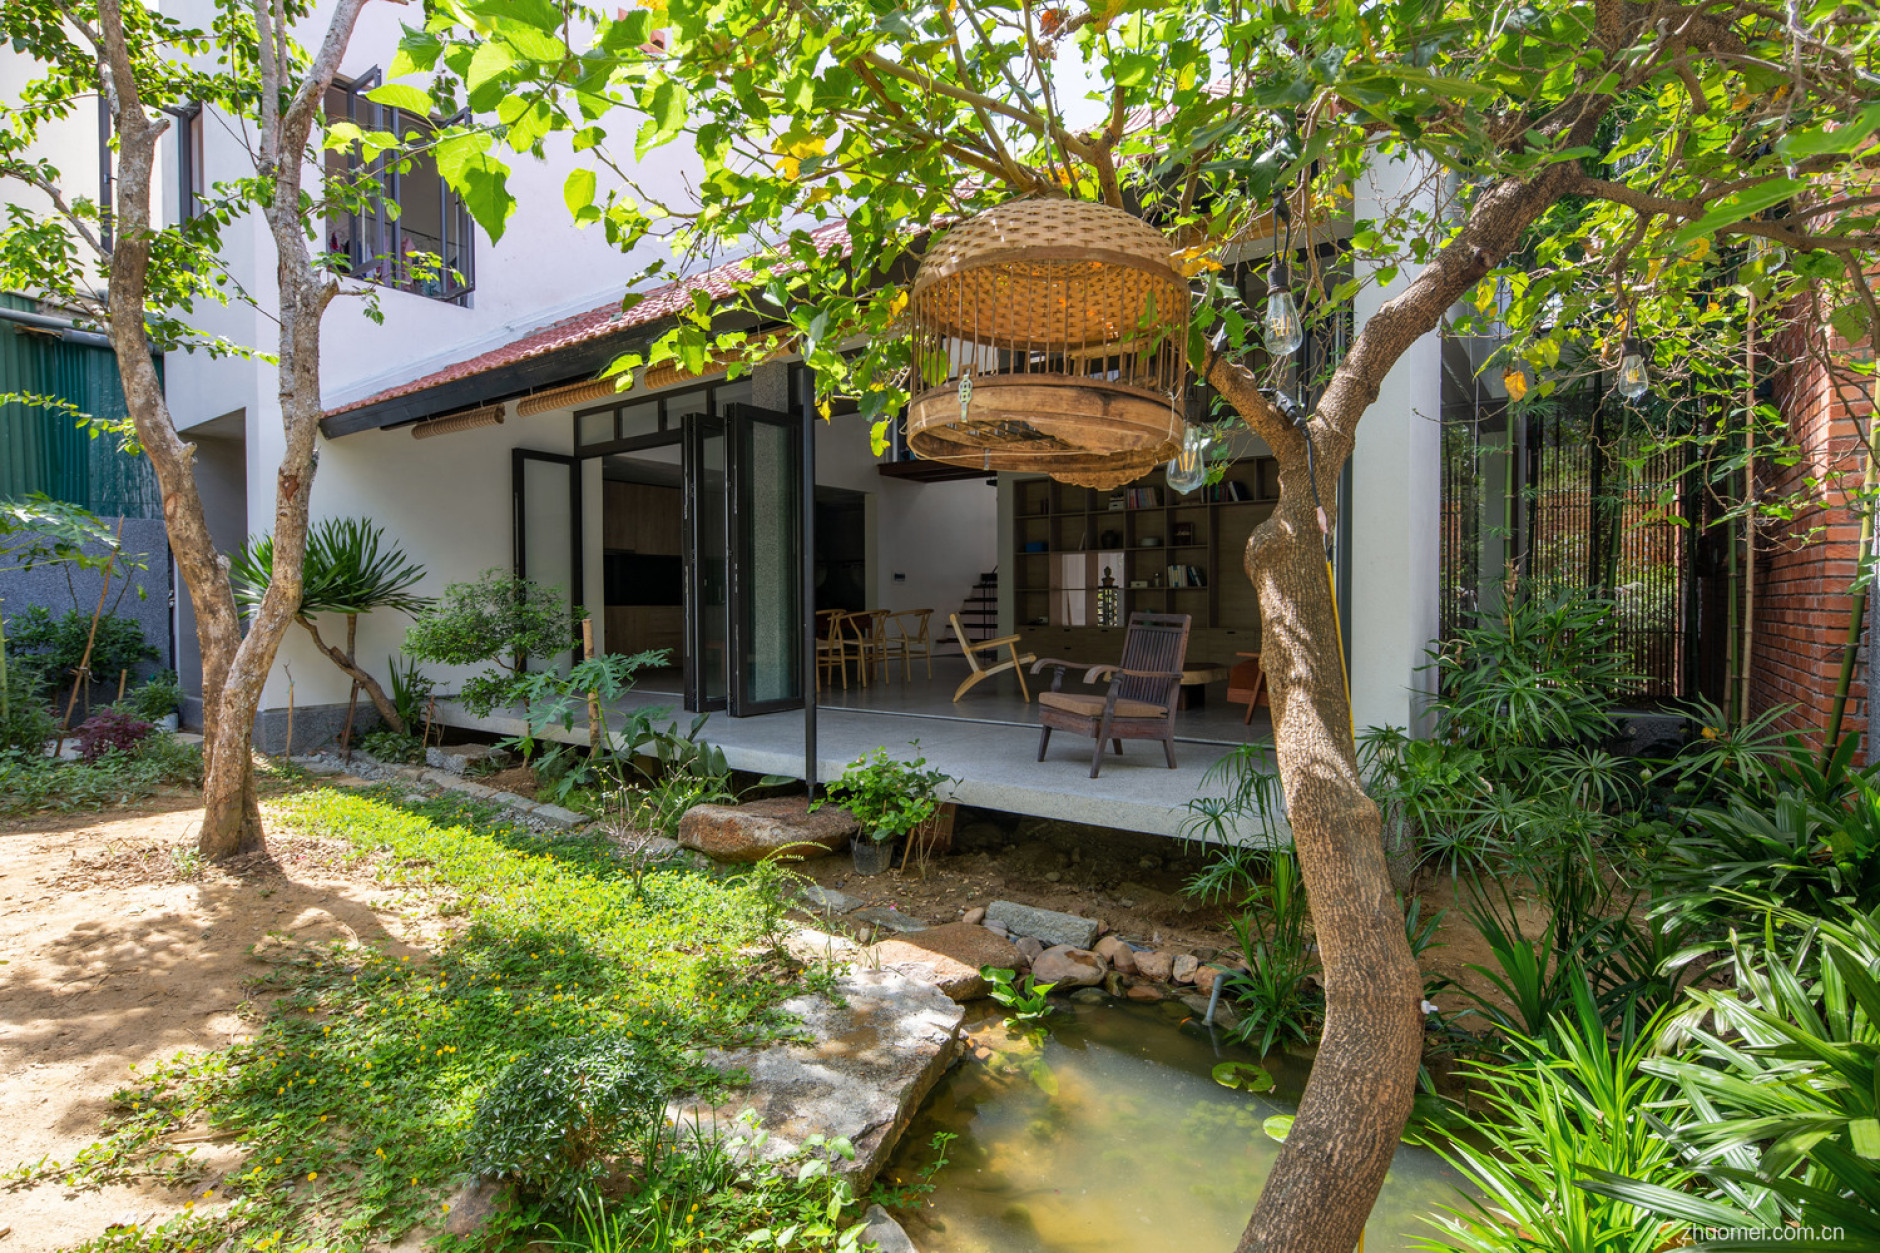 Dom Architect Studio丨The Tiamo House丨越南-40